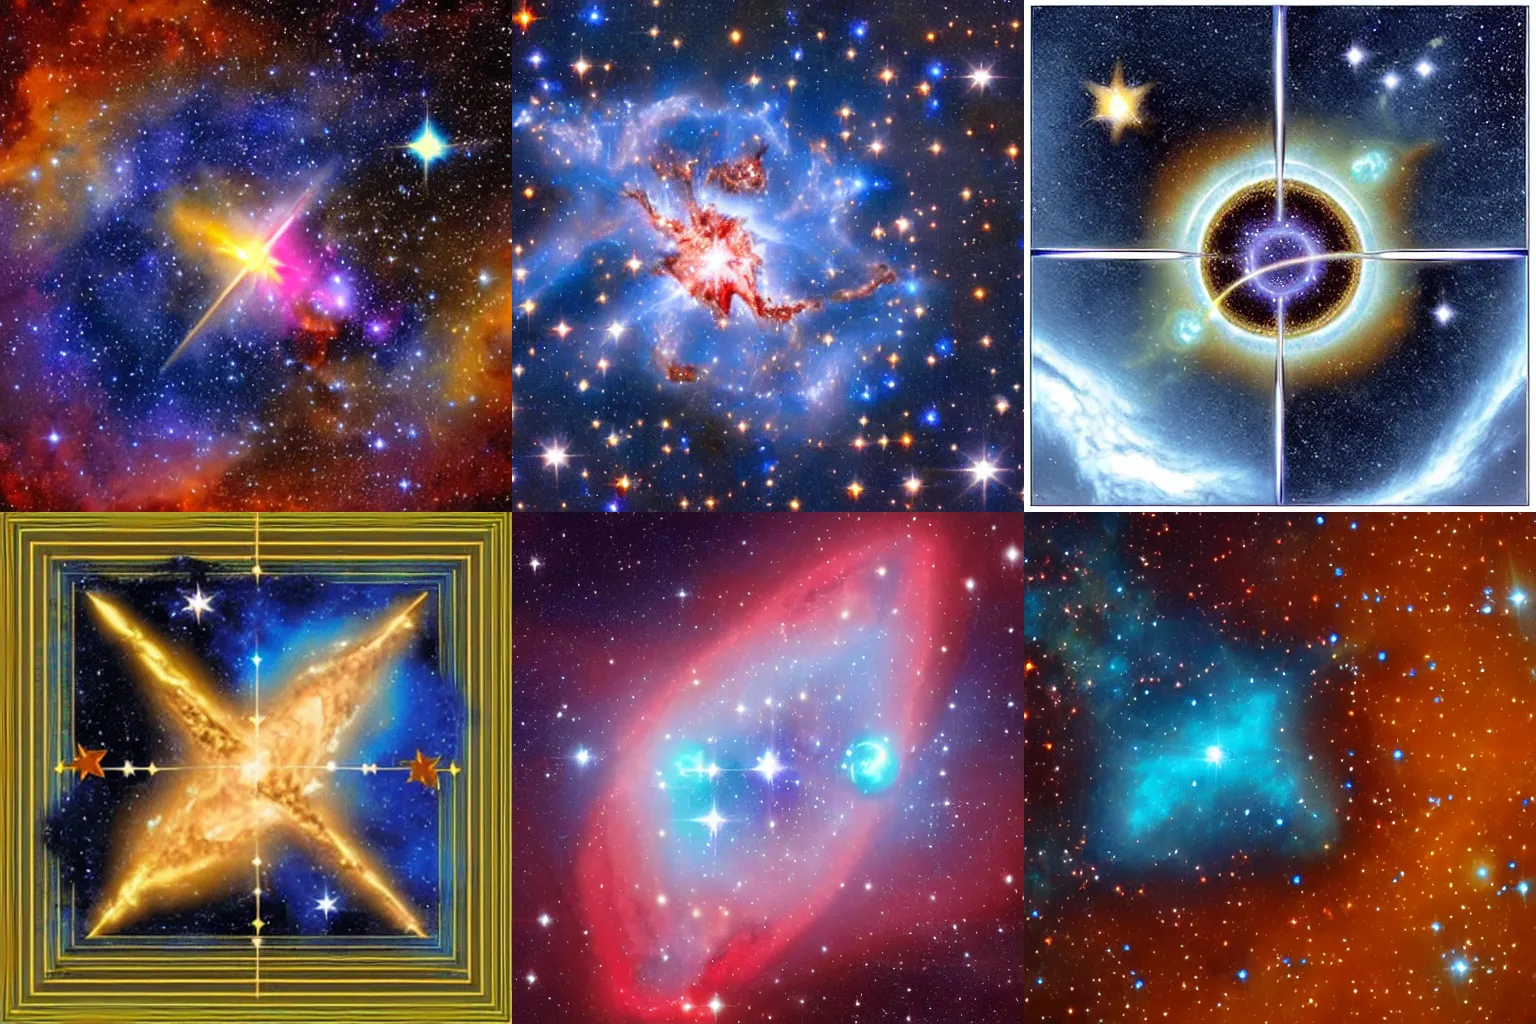 Prompt: gemini star formation